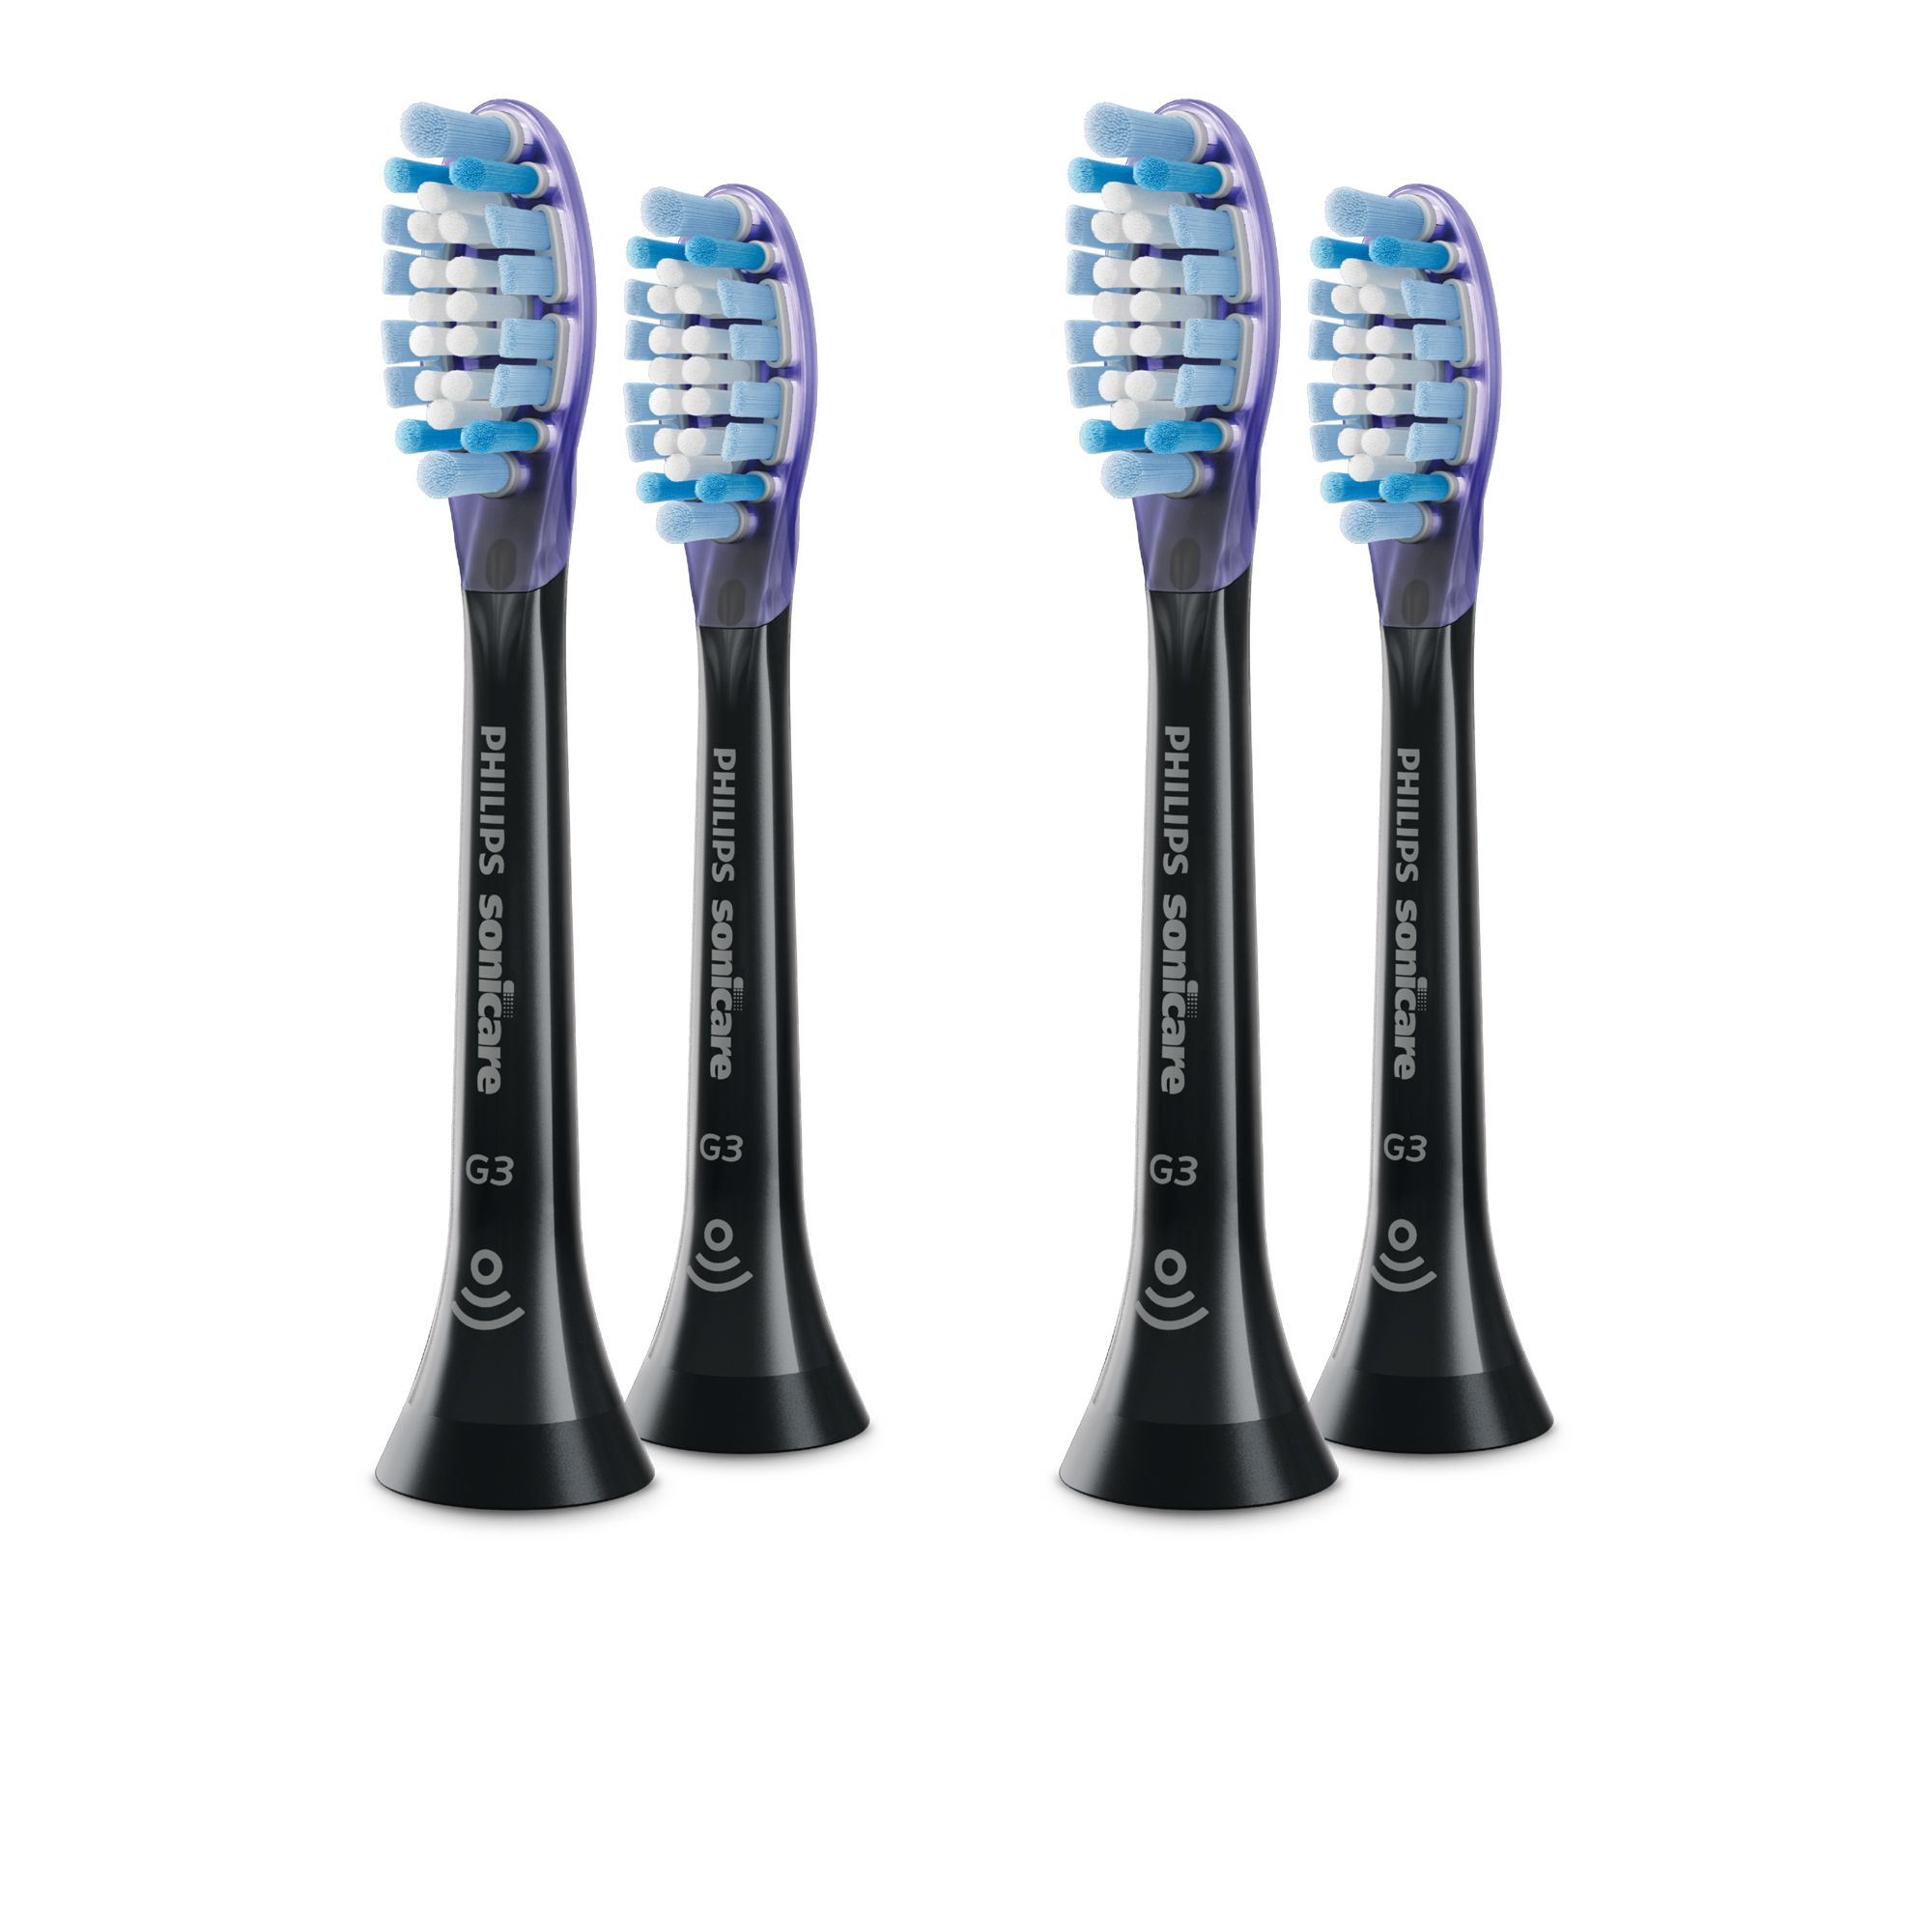 4 testine G3 Premium Gum Care per spazzolino elettrico